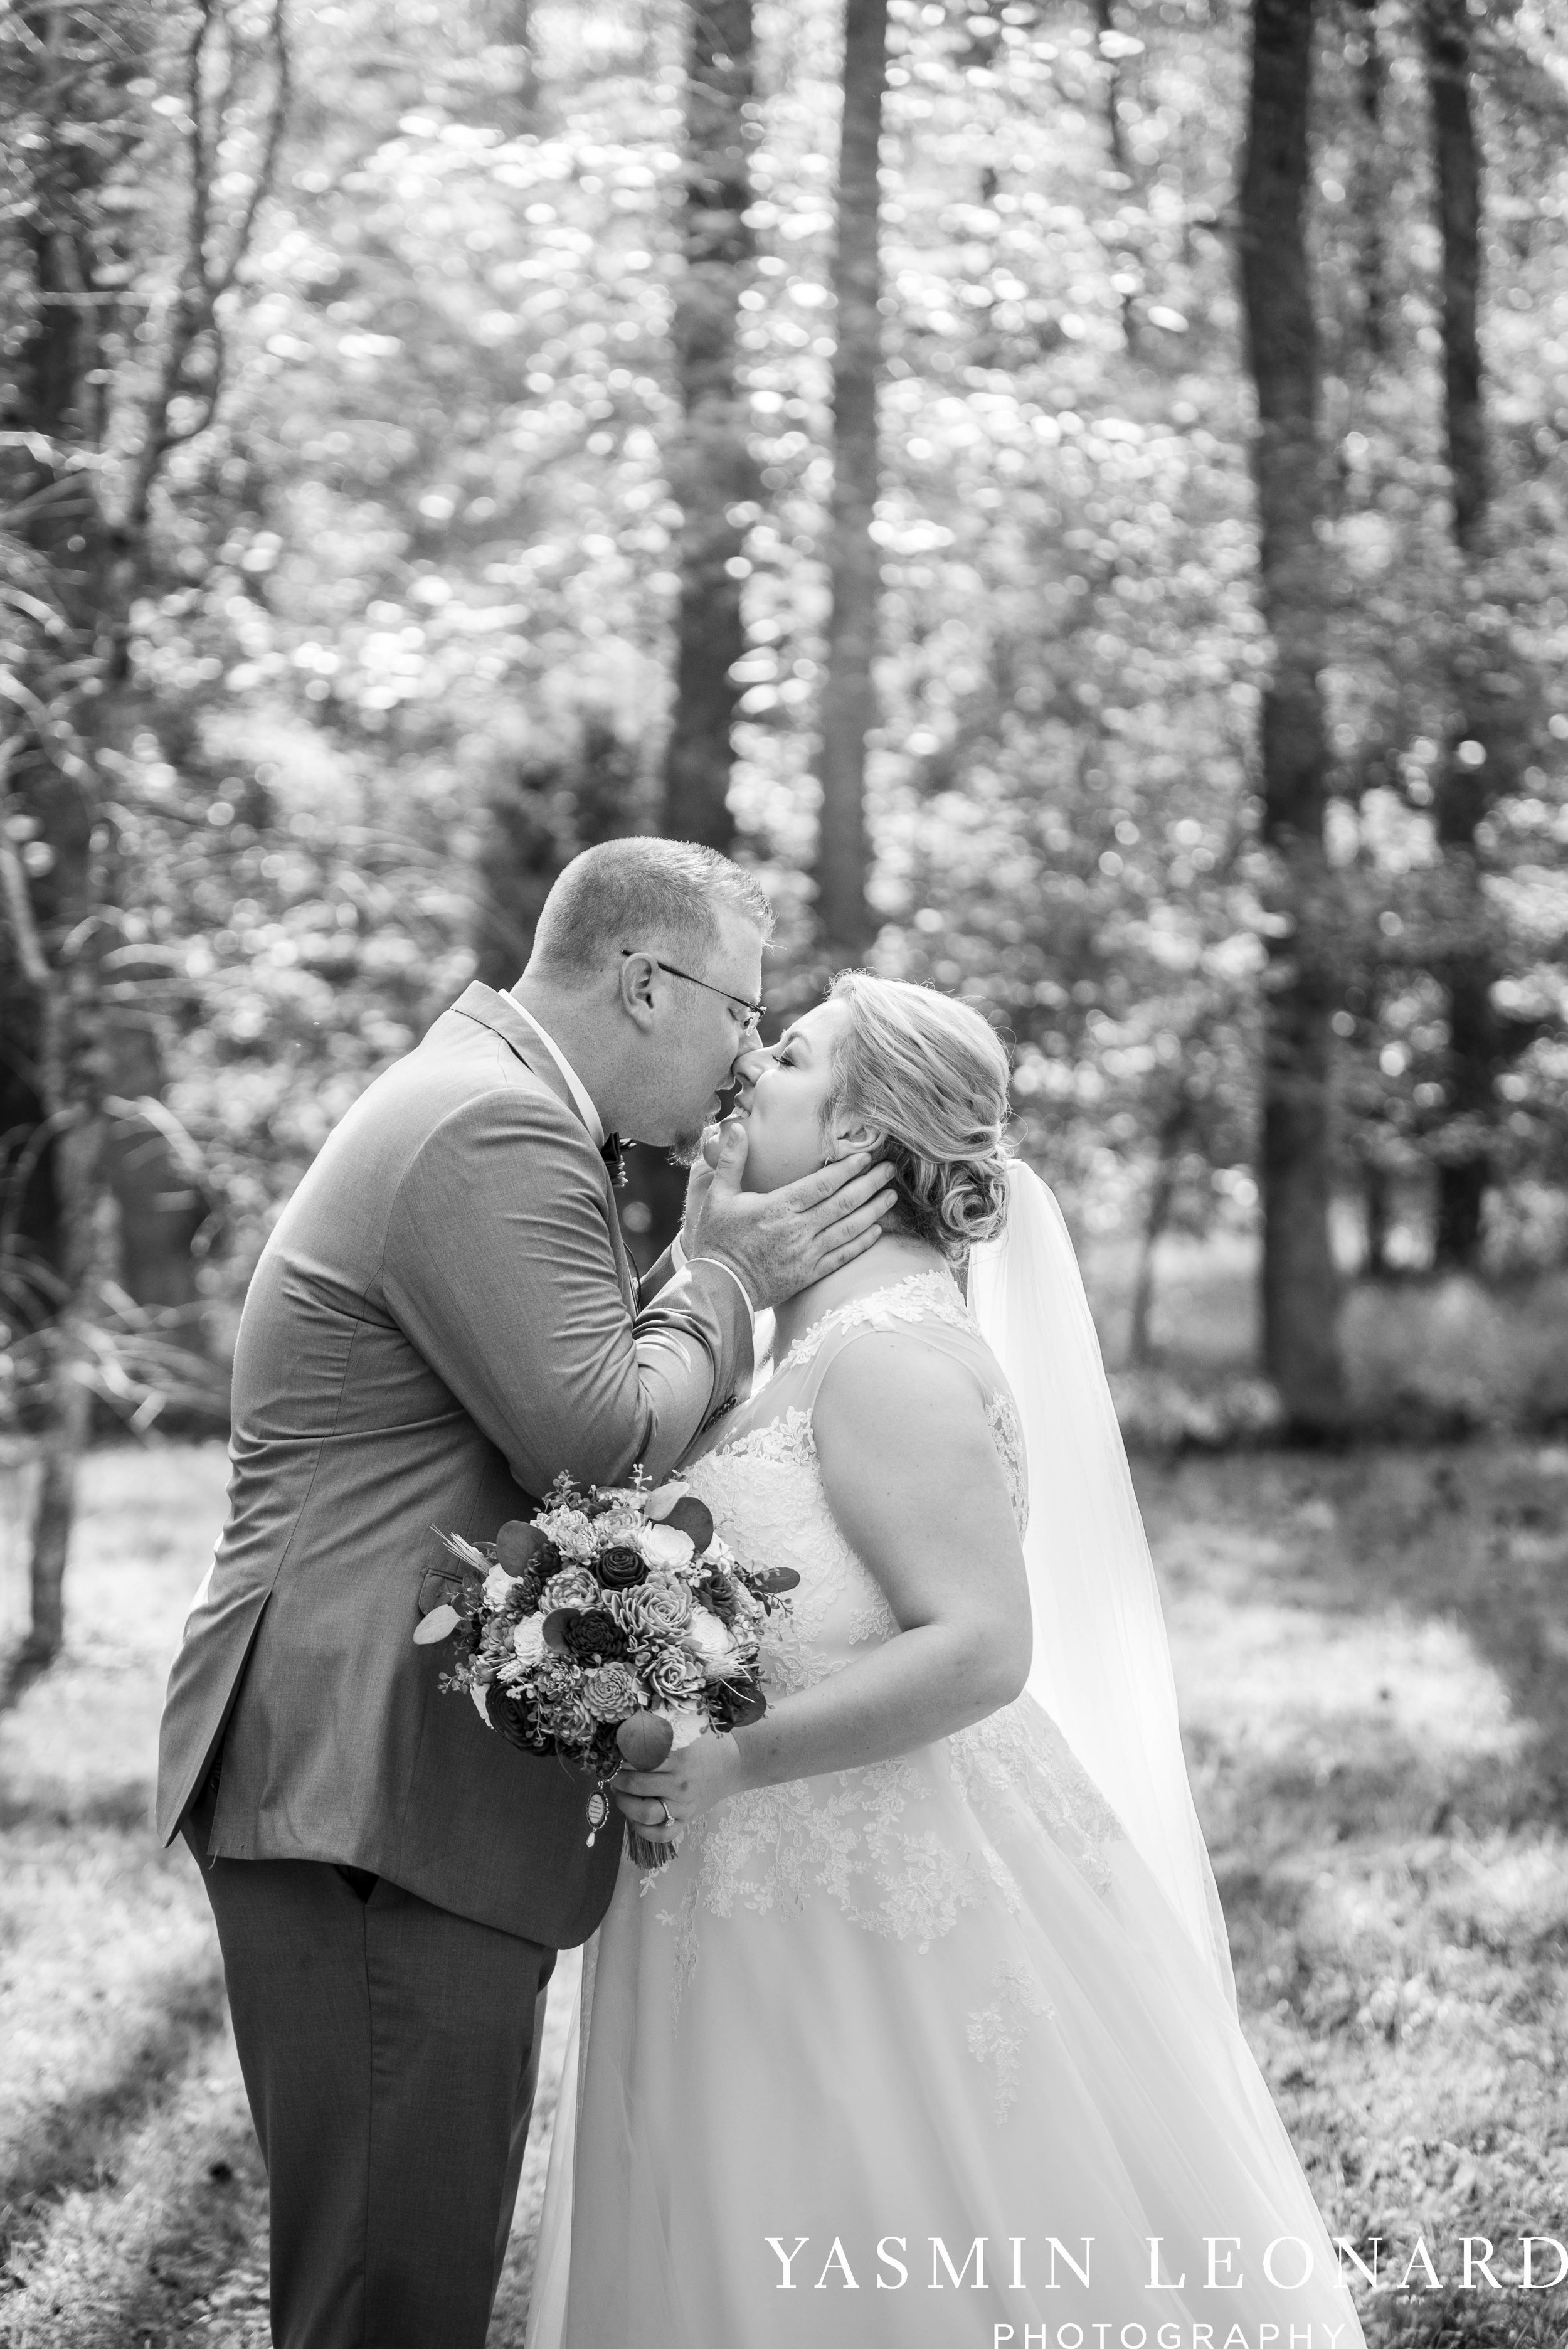 Danner Farms - NC Wedding Venues - NC Barns - Statesville NC - NC Wedding Photographer - High Point Wedding Photographer - Yasmin Leonard Photography-14.jpg